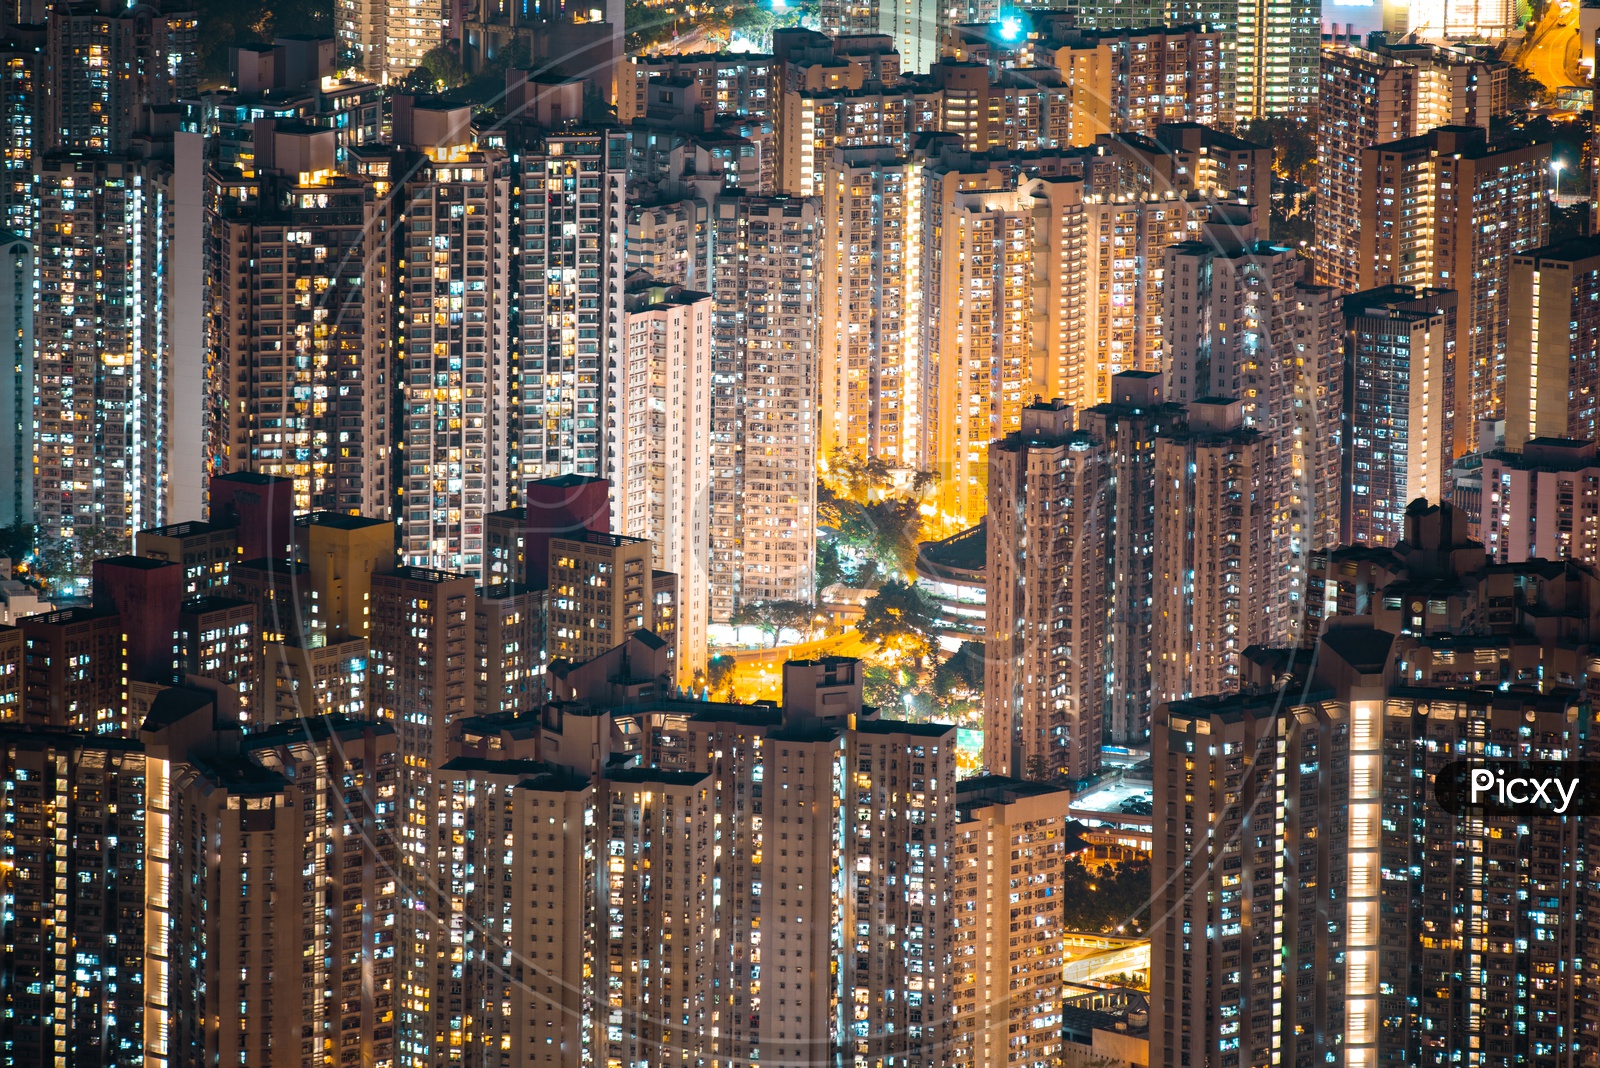 Hong Kong skyscrapers during night